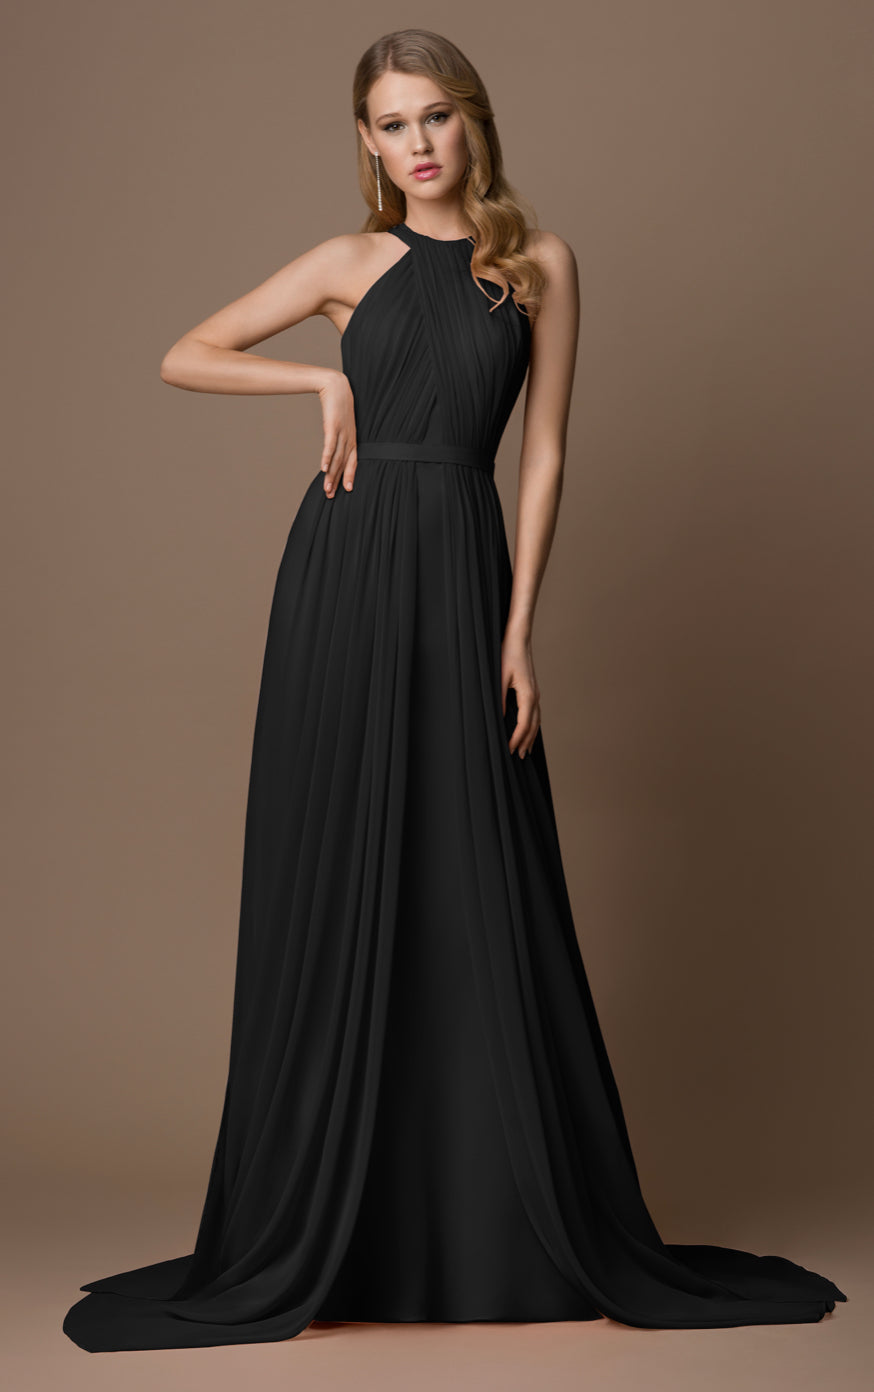 Prom Evening Dress - GC 4004G